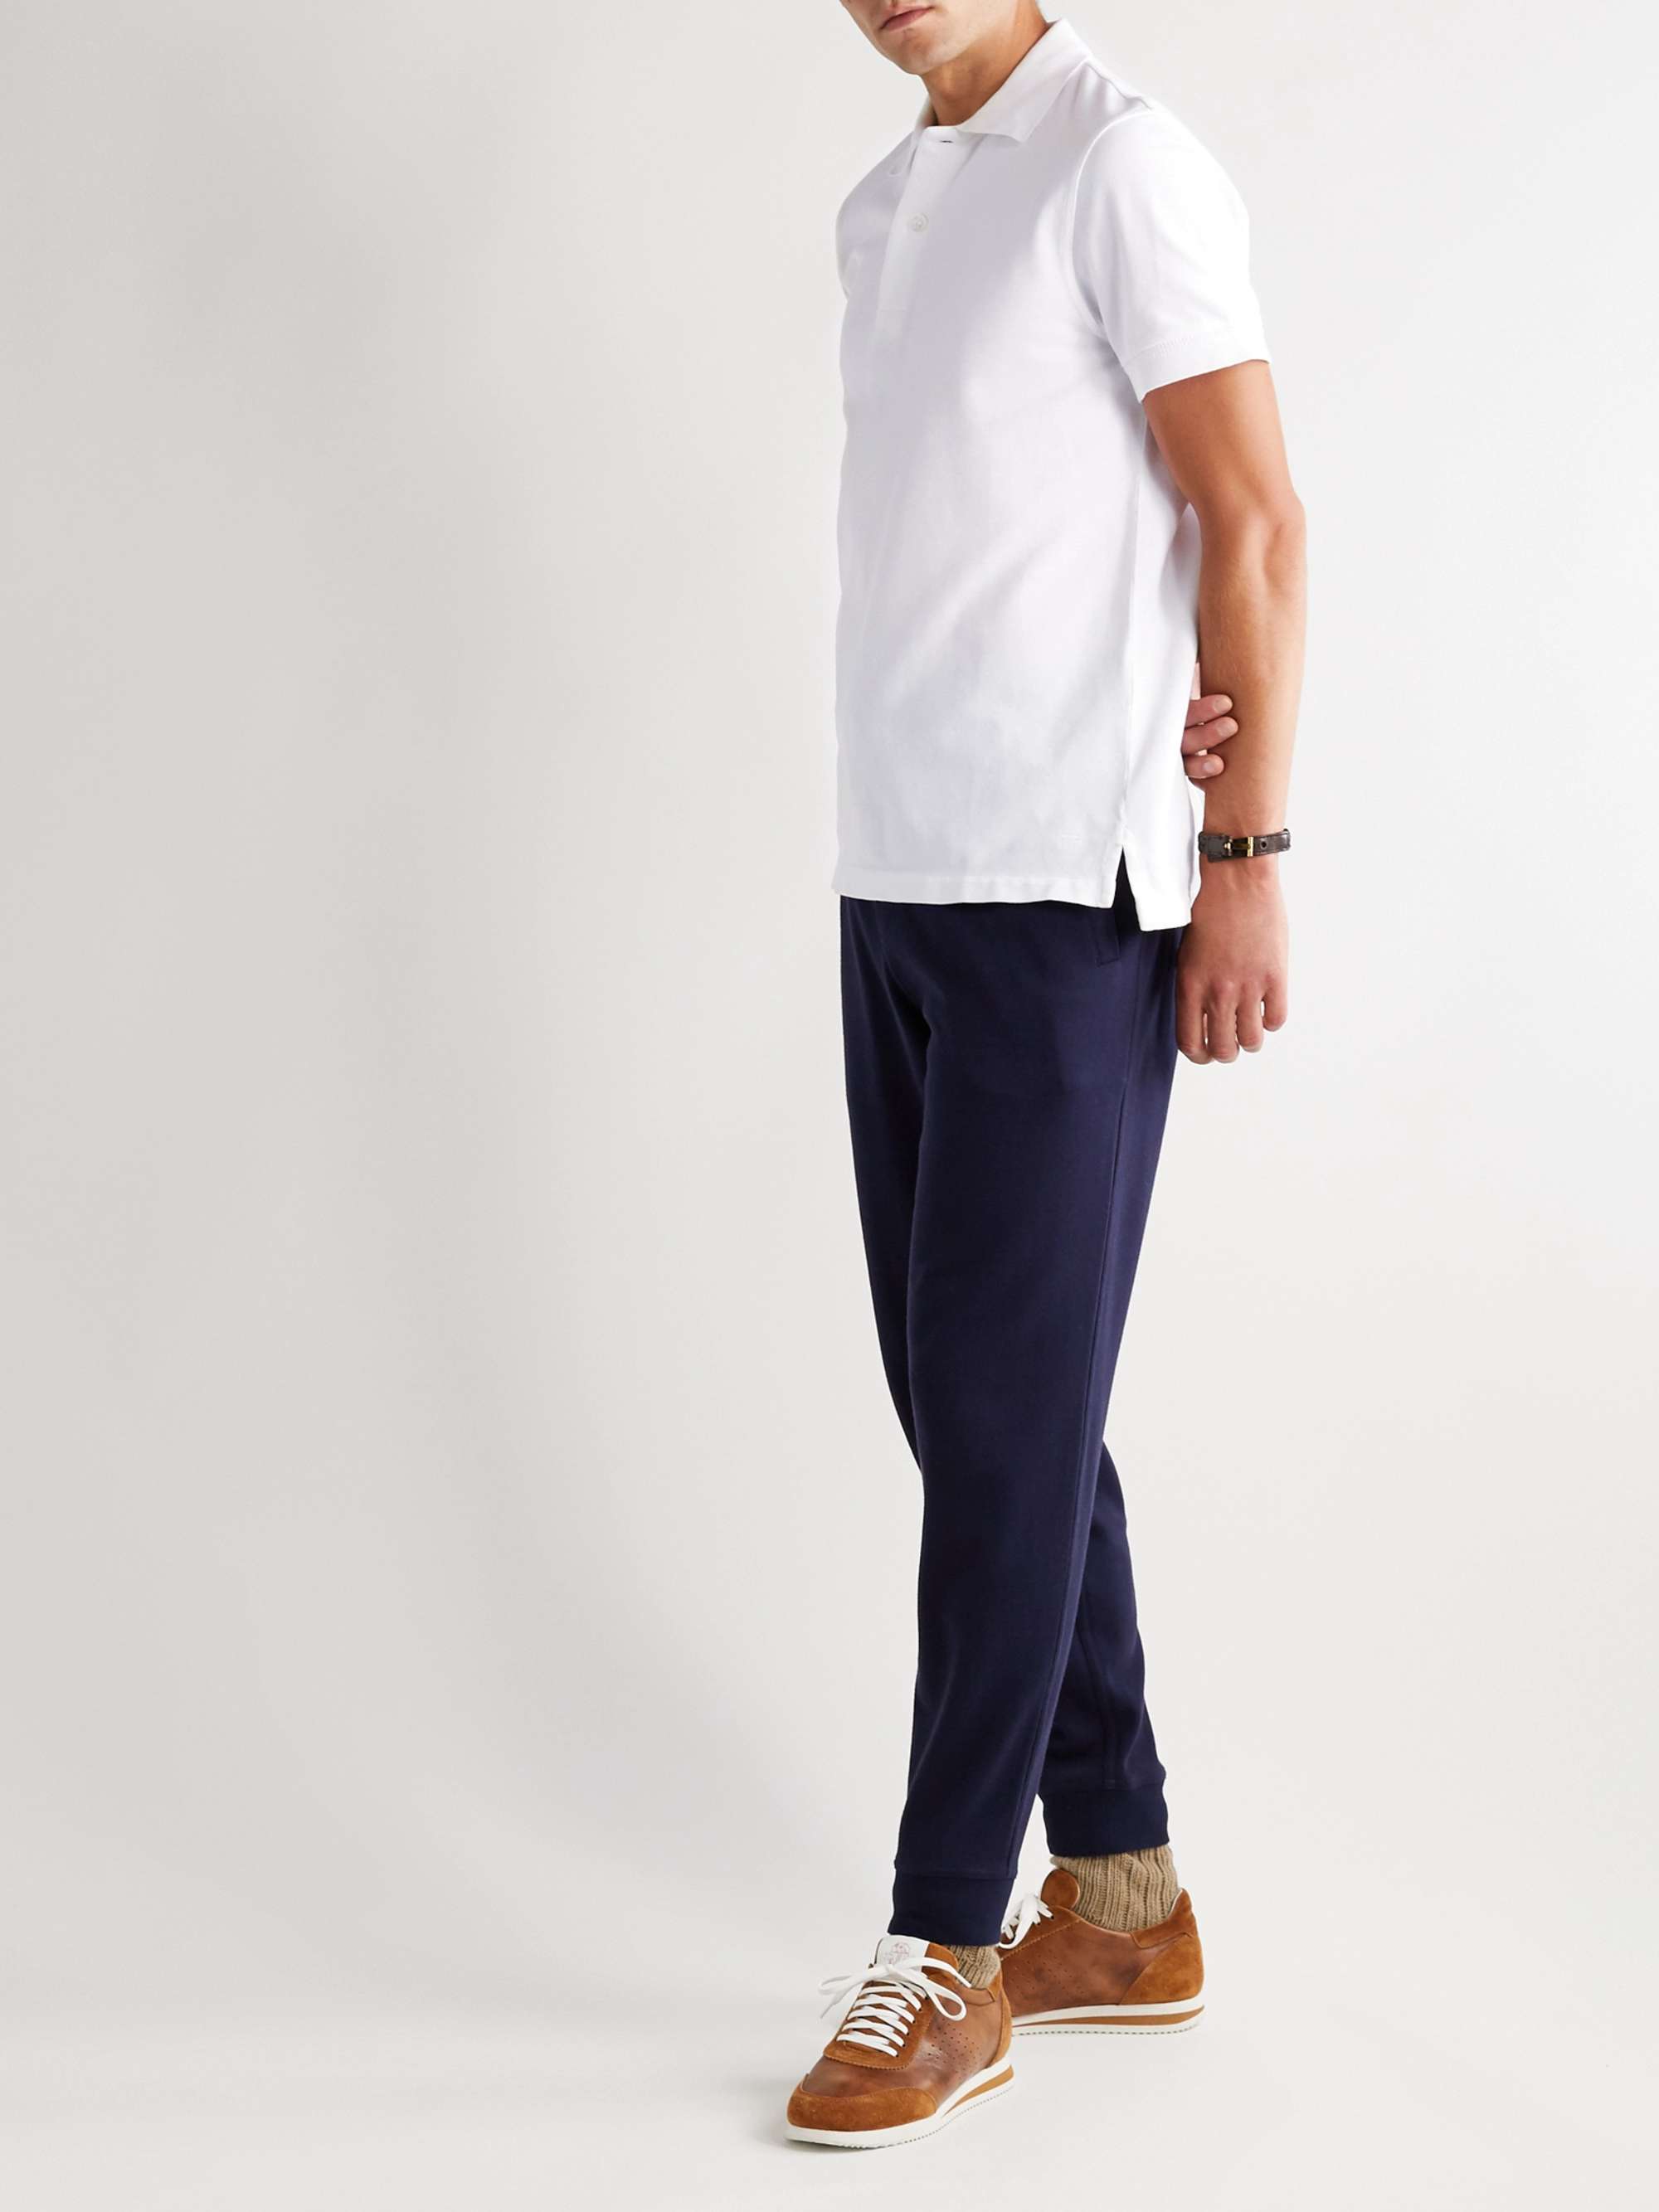 TOM FORD Slim-Fit Cotton-Piqué Polo Shirt | MR PORTER